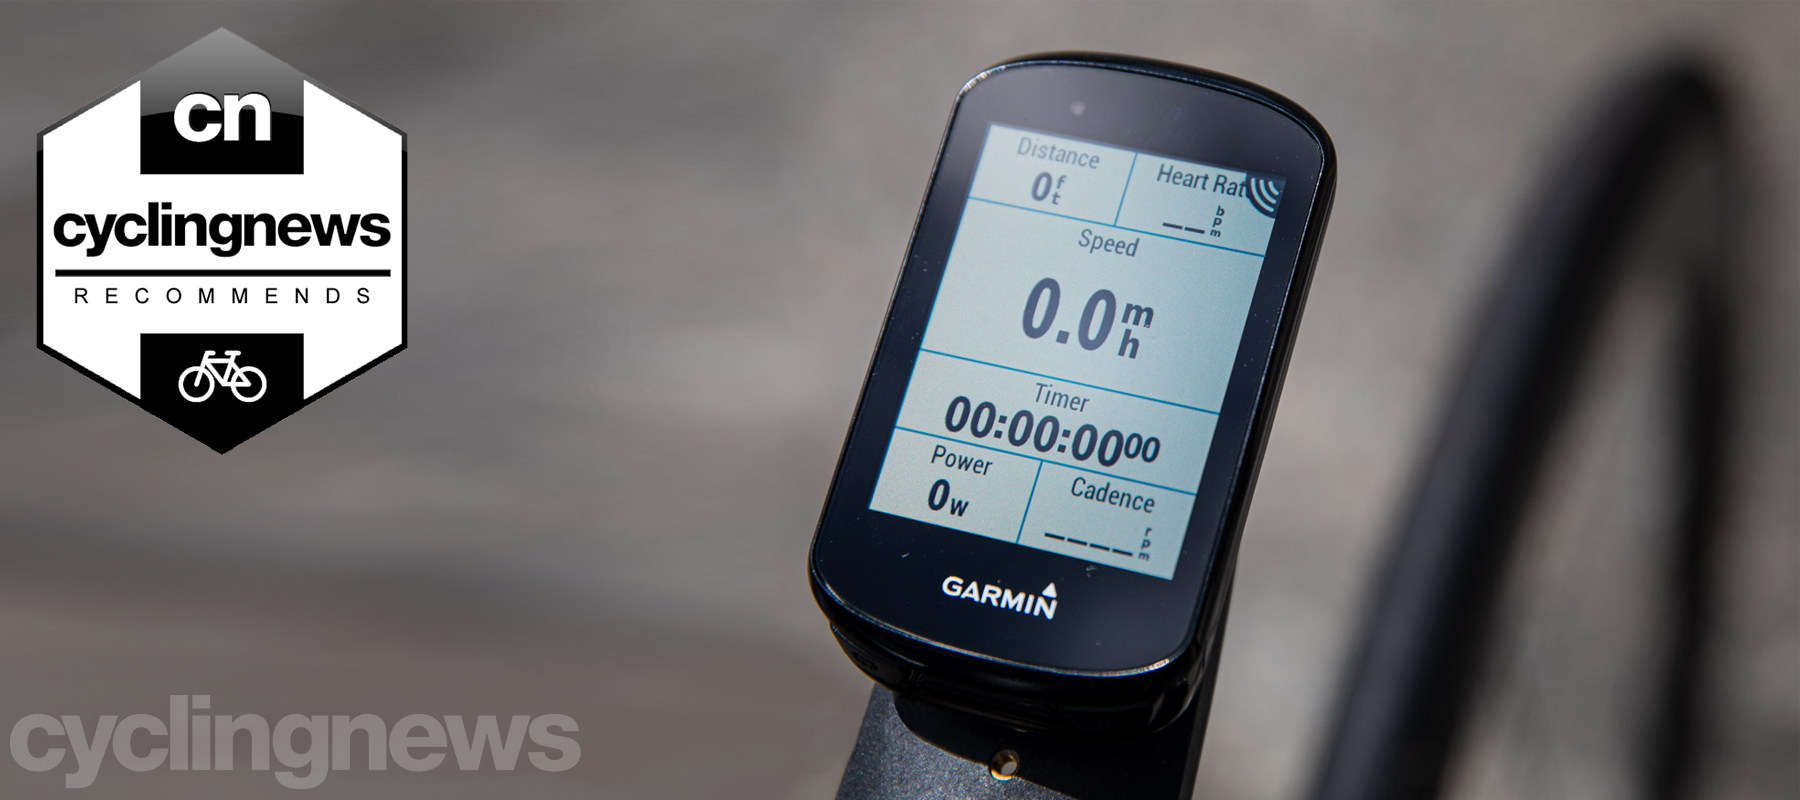 Garmin Edge 830 cycling computer: In-depth review | Cyclingnews